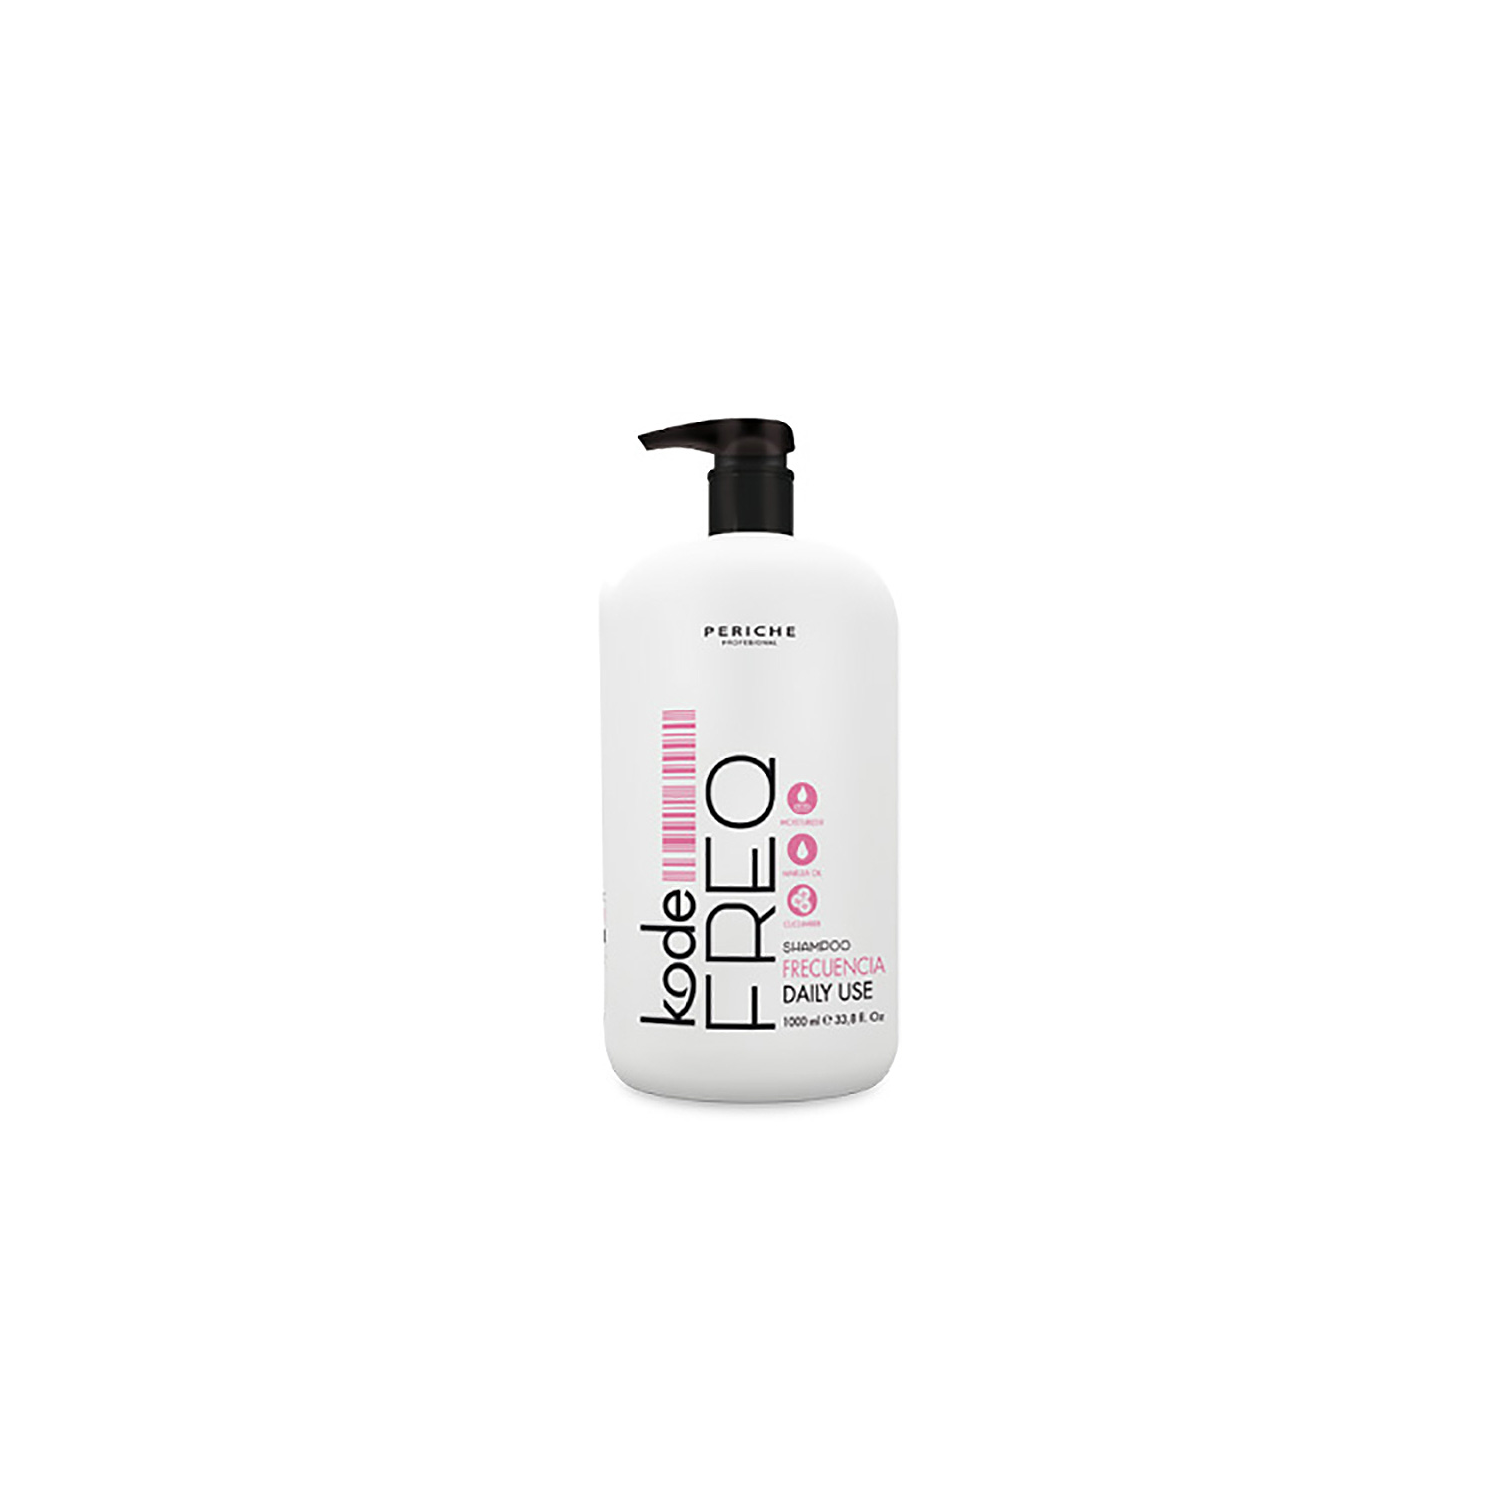 Periche Kode Frequenza Shampoo 500 ml